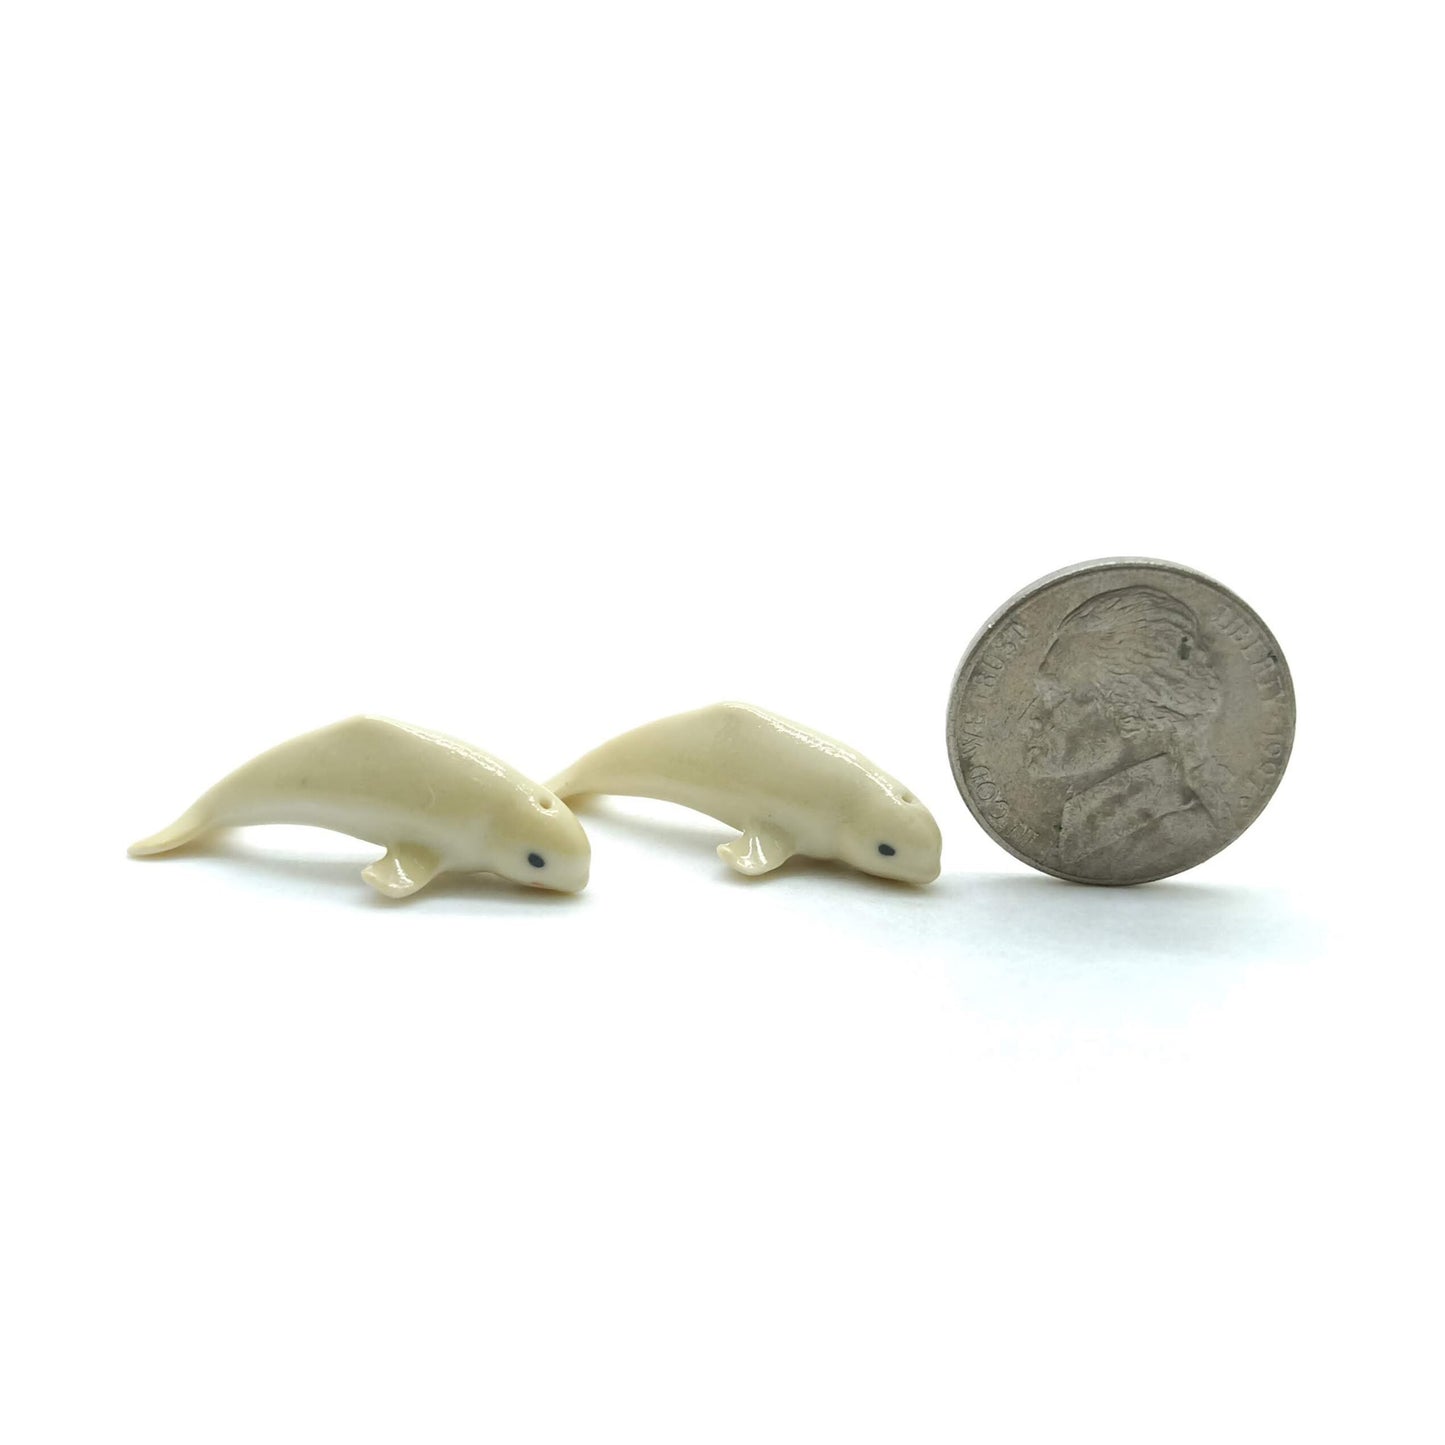 2 Humpback Dolphin Ceramic Figurine Tiny Dollhouse Miniature